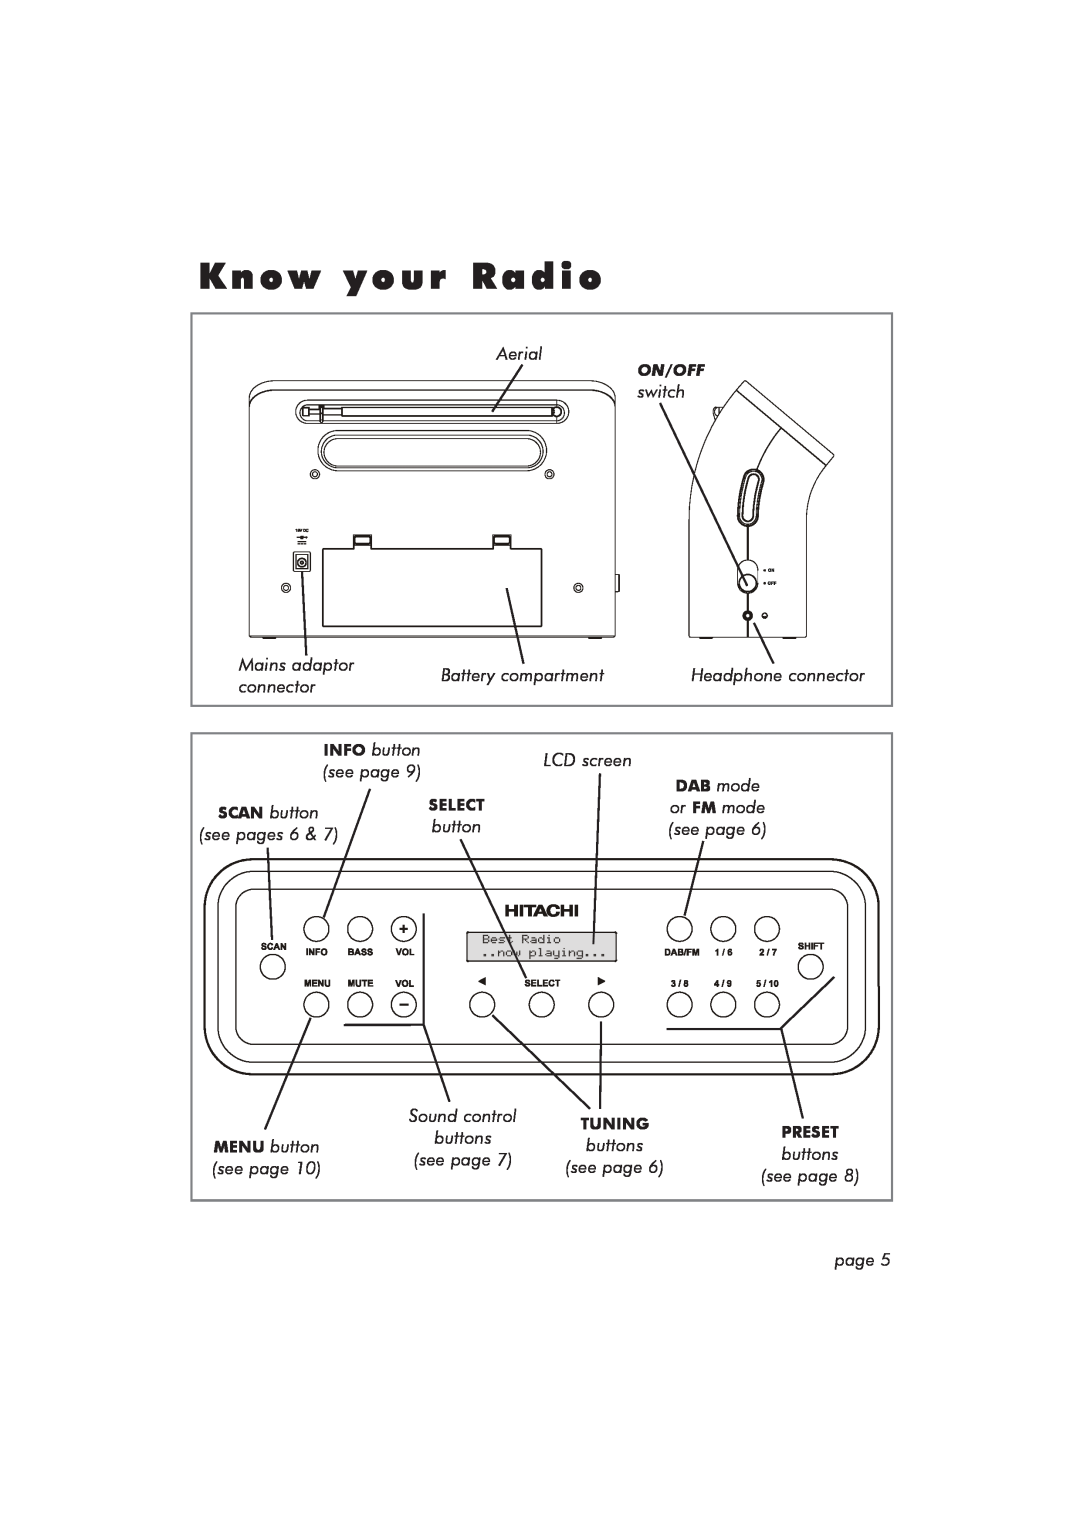 Hitachi TRK100DAB manual Know your Radio 